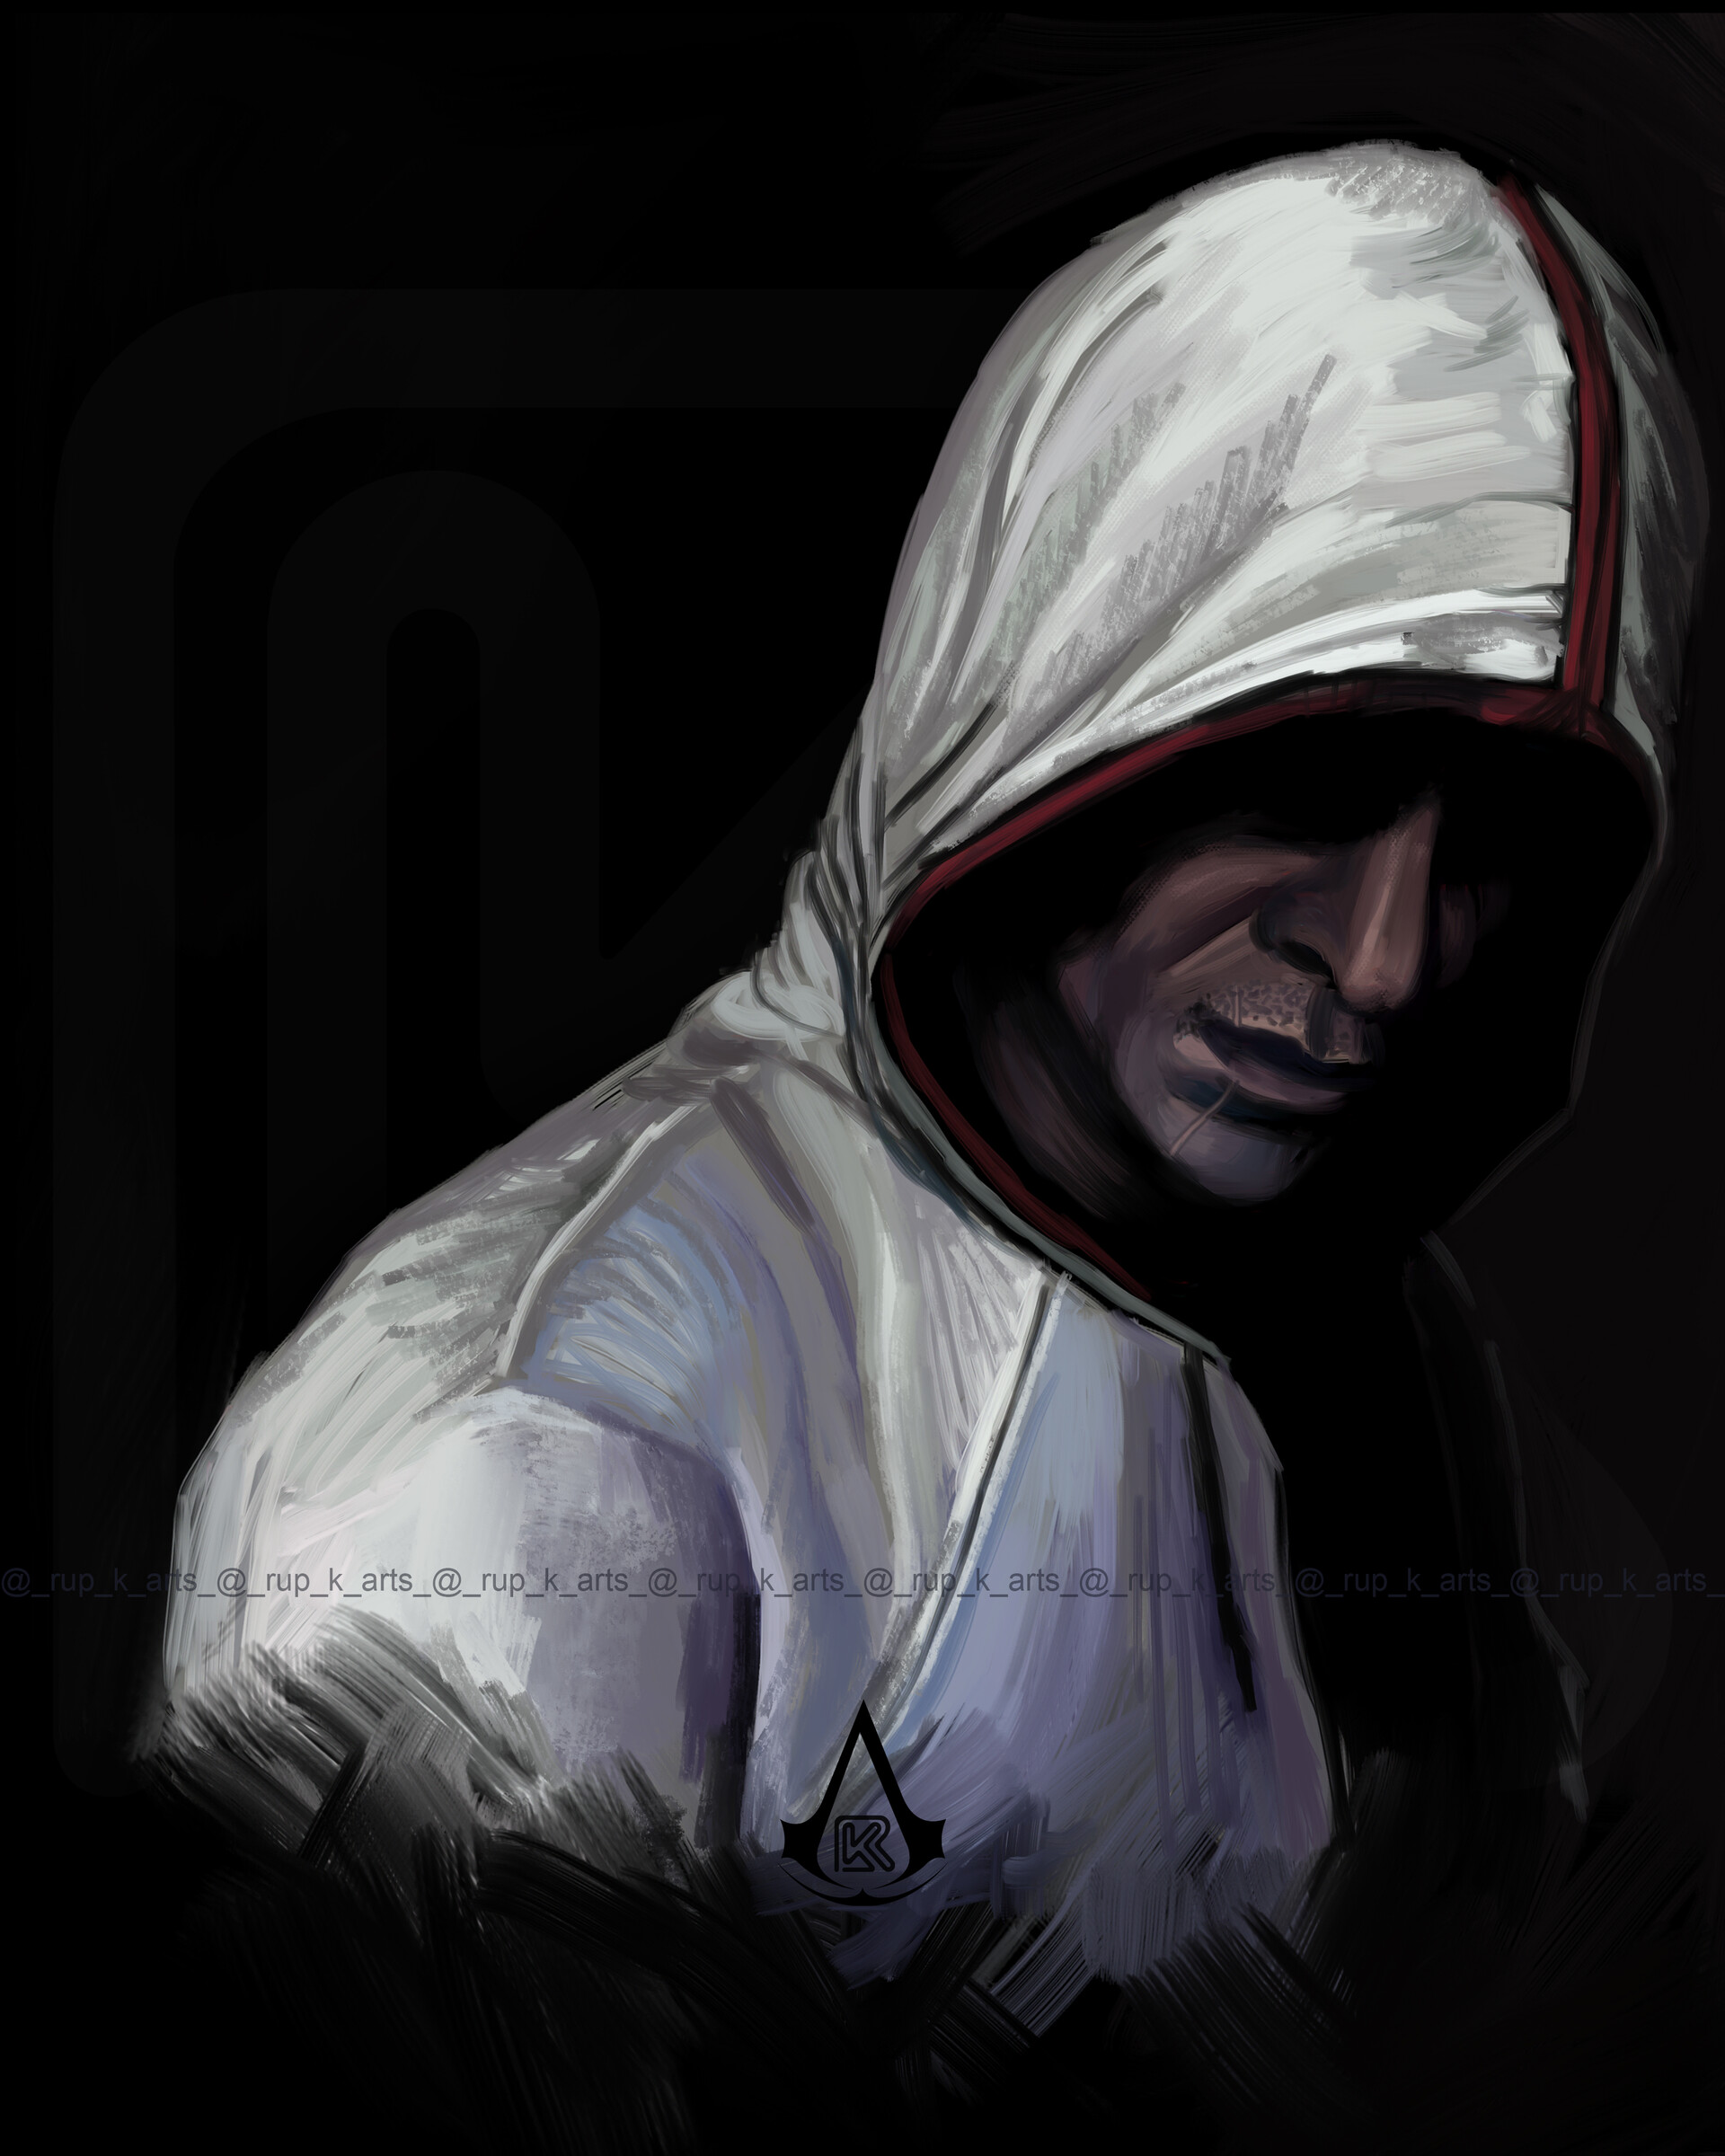 Rup_K _arts - Miles Assassins Creed